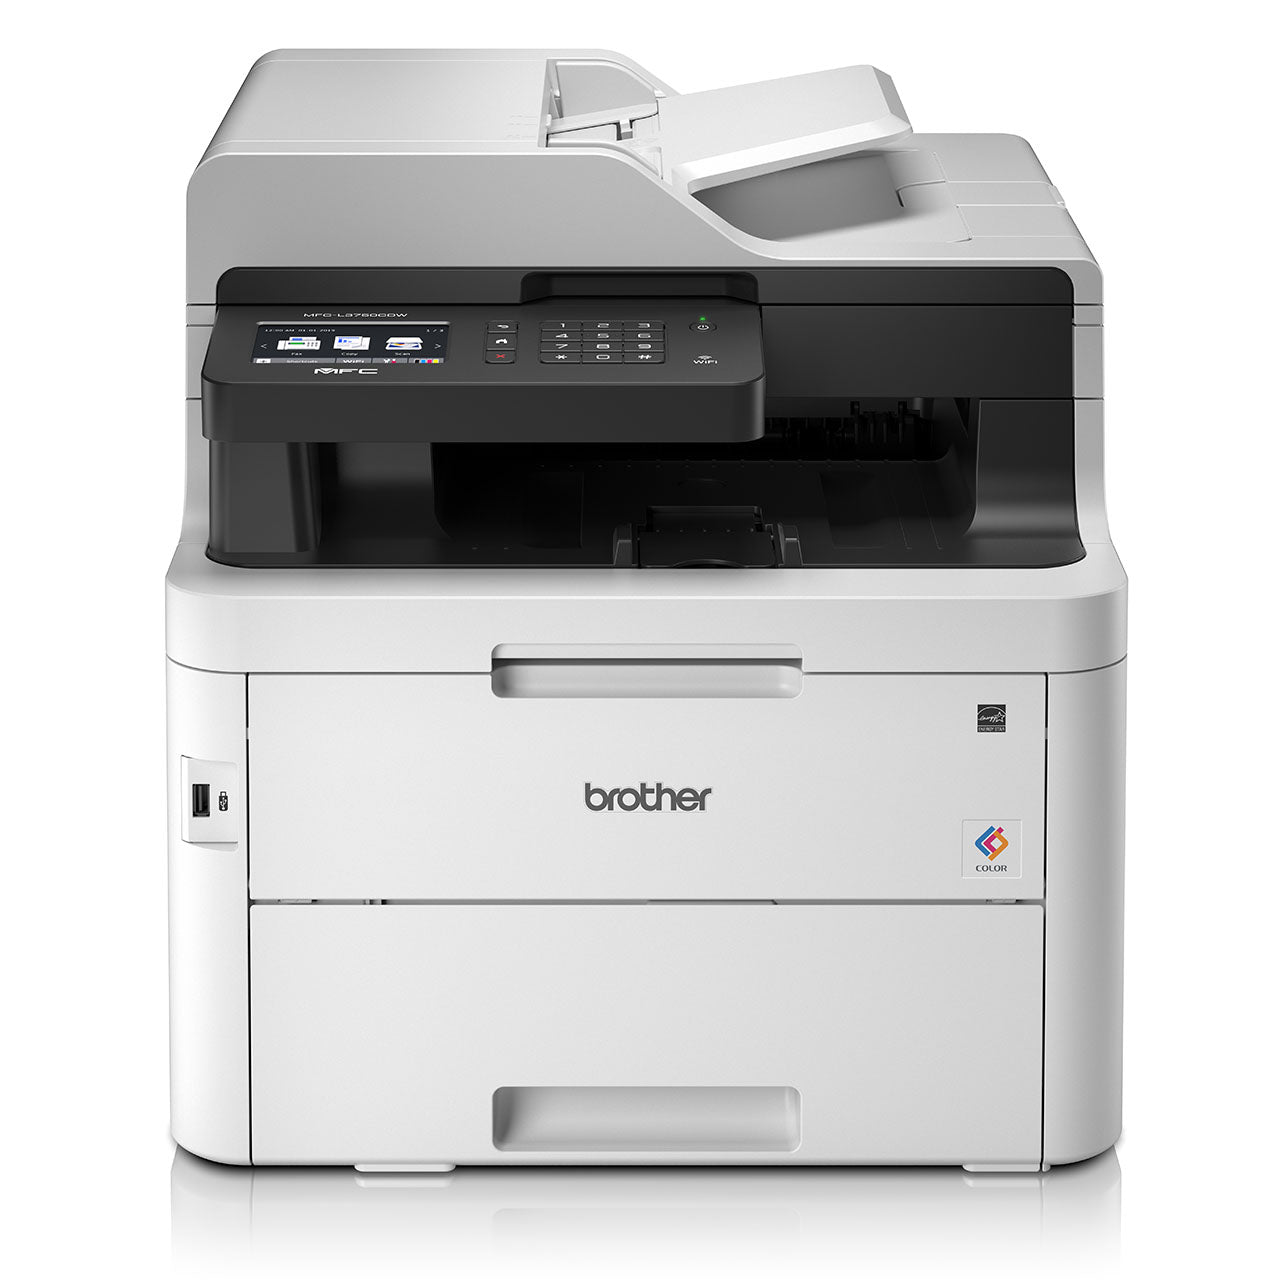 Brother MFC-L3750CDW Laser Printer (MFC-L3750CDW)